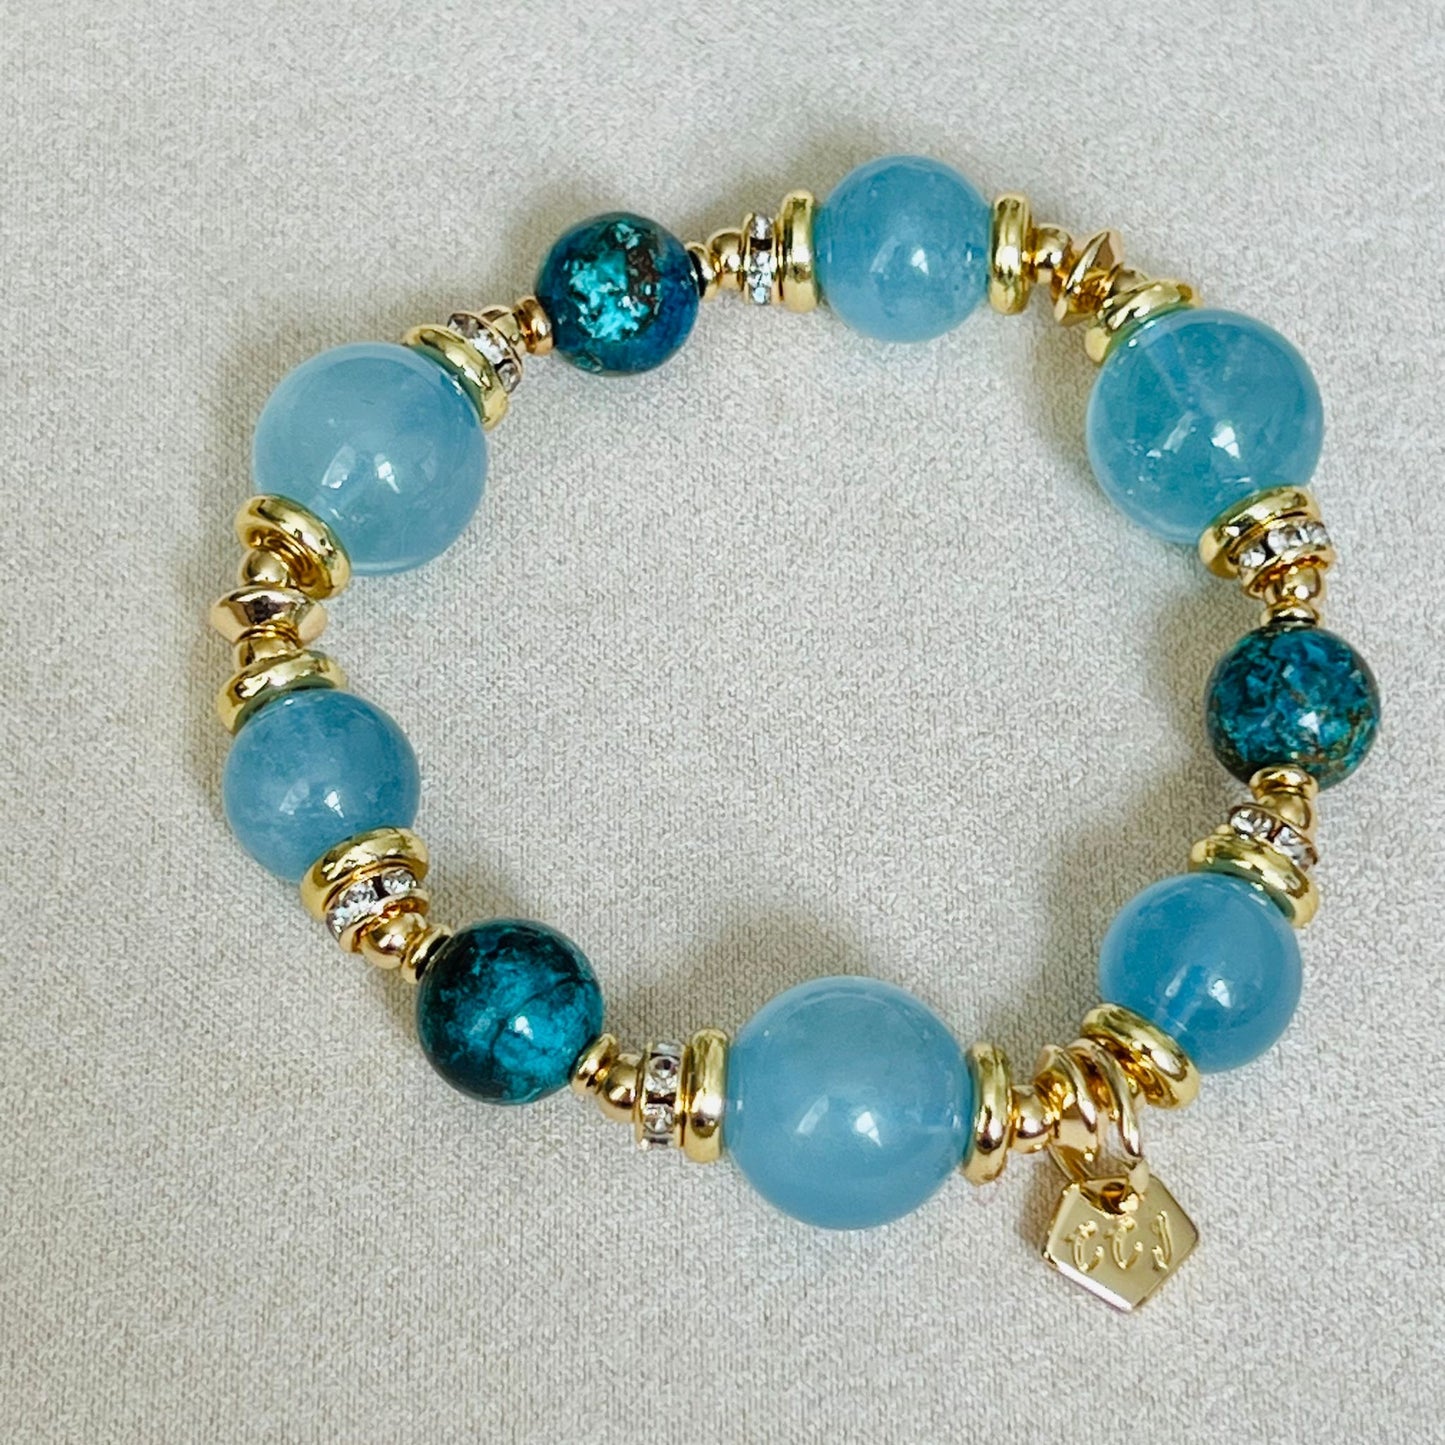 Wow-So-Wise Aquamarine Bracelet